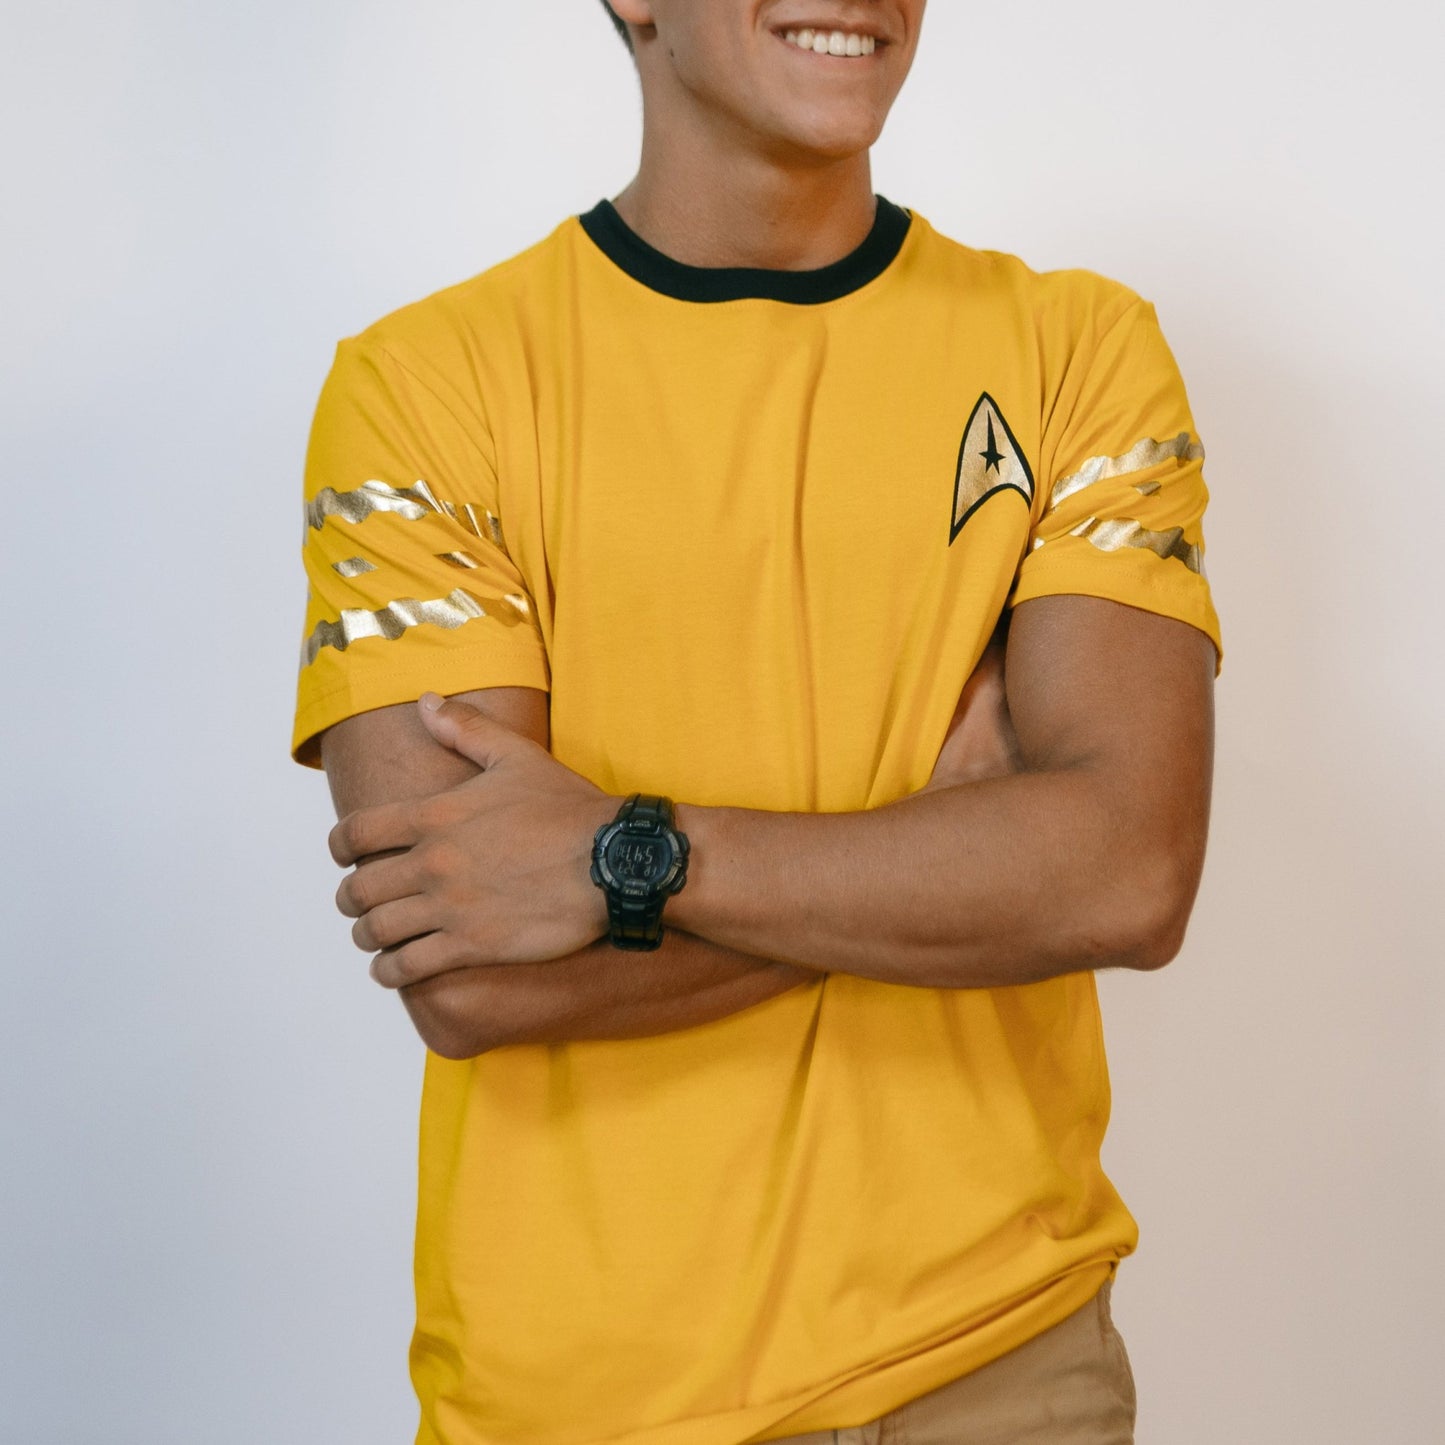 Star Trek: The Original Series Command Uniform T - Shirt - Paramount Shop